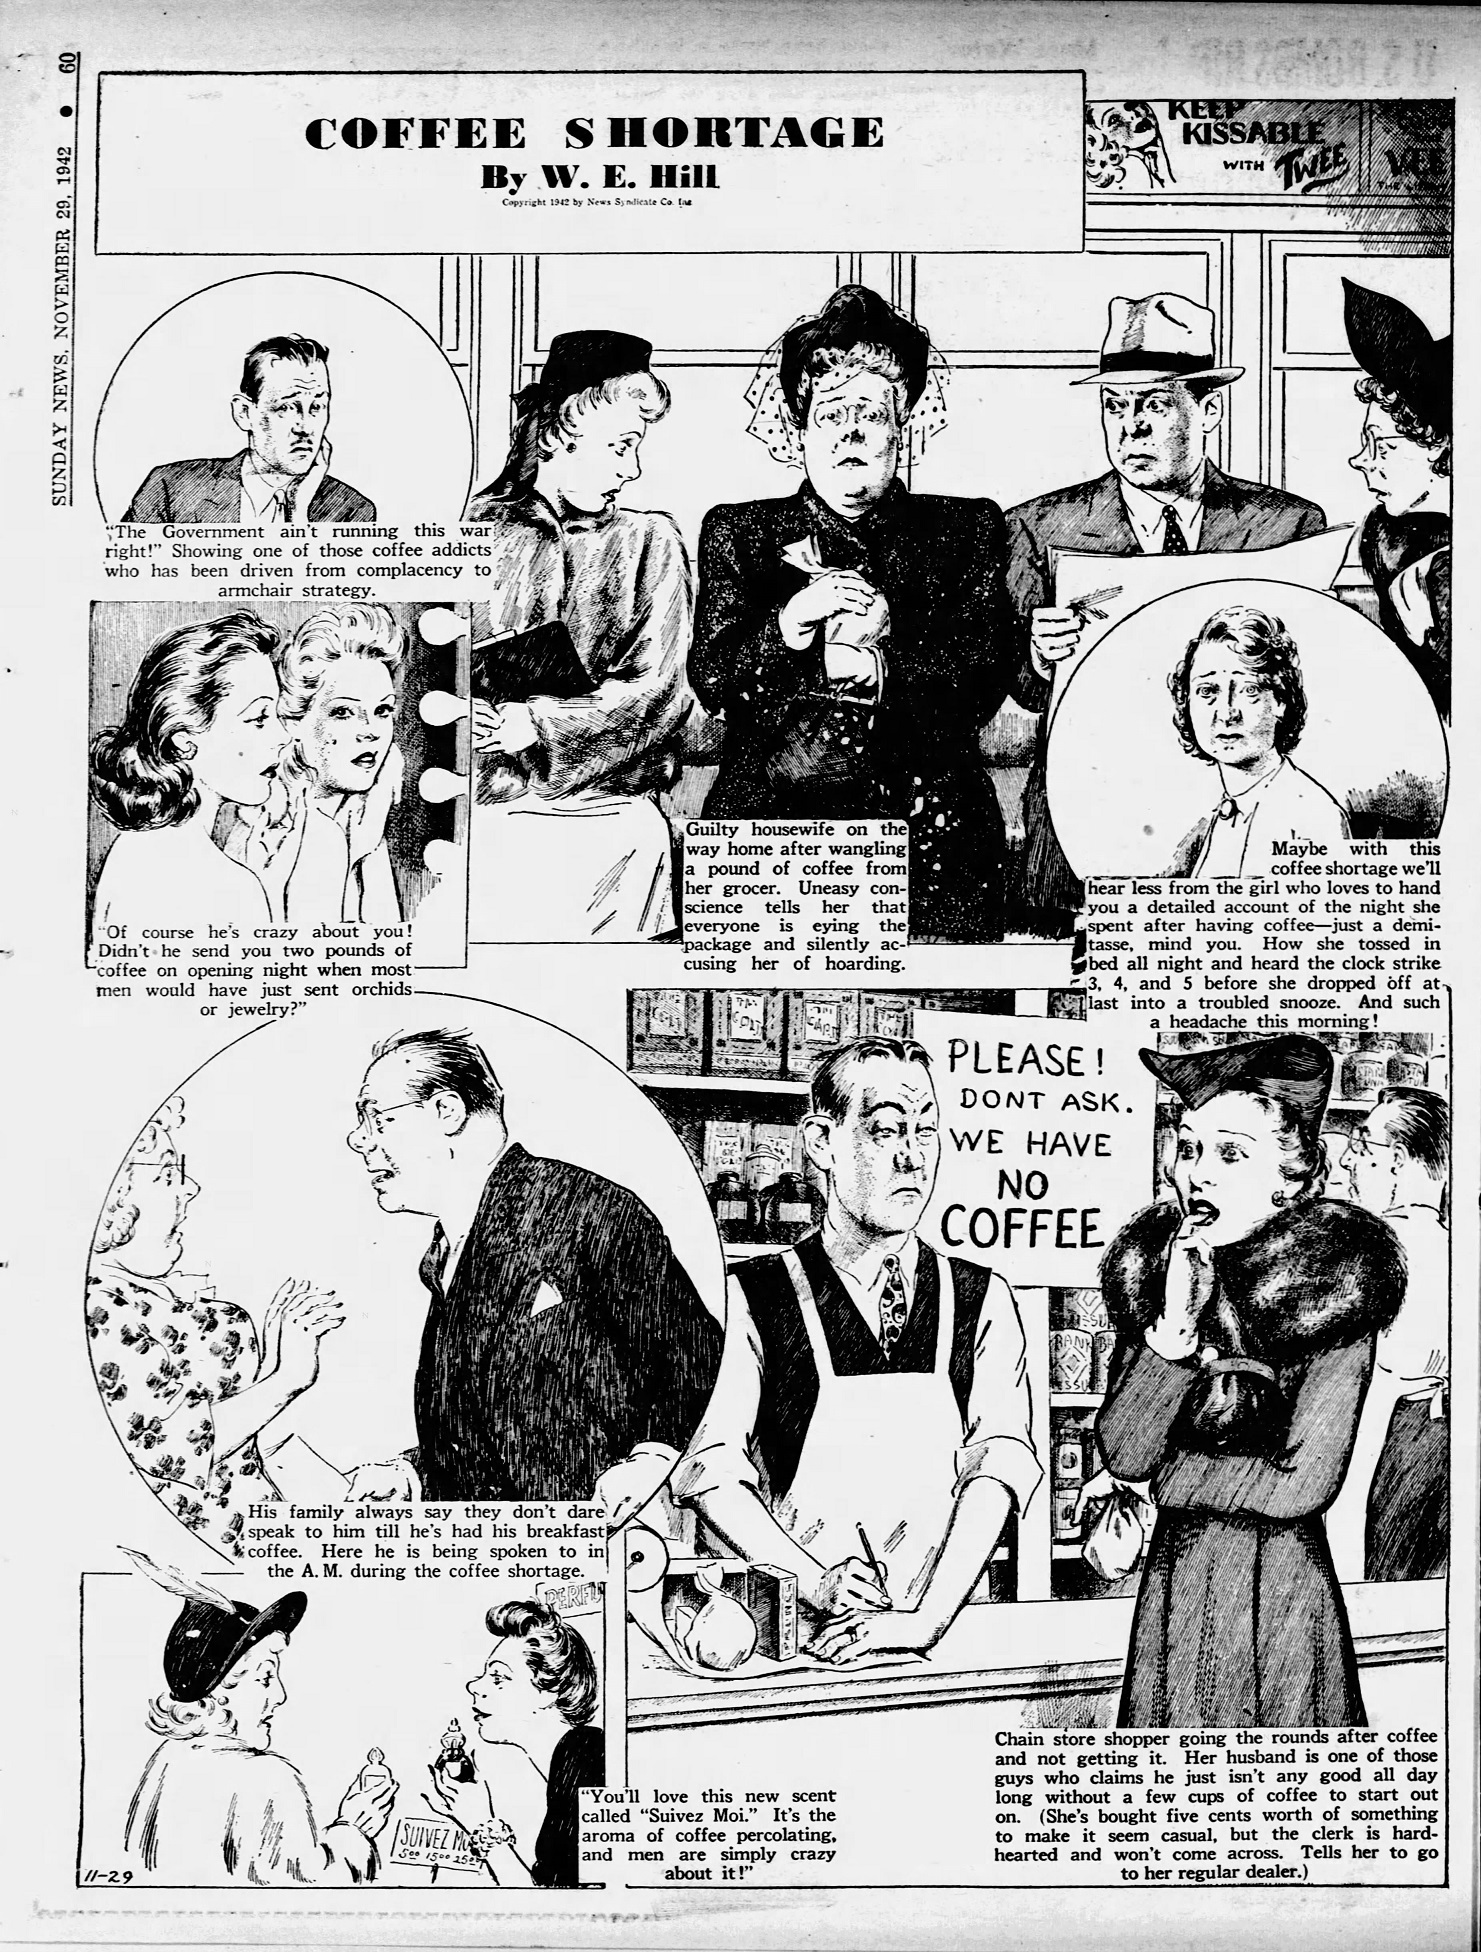 Daily_News_Sun__Nov_29__1942_(1).jpg